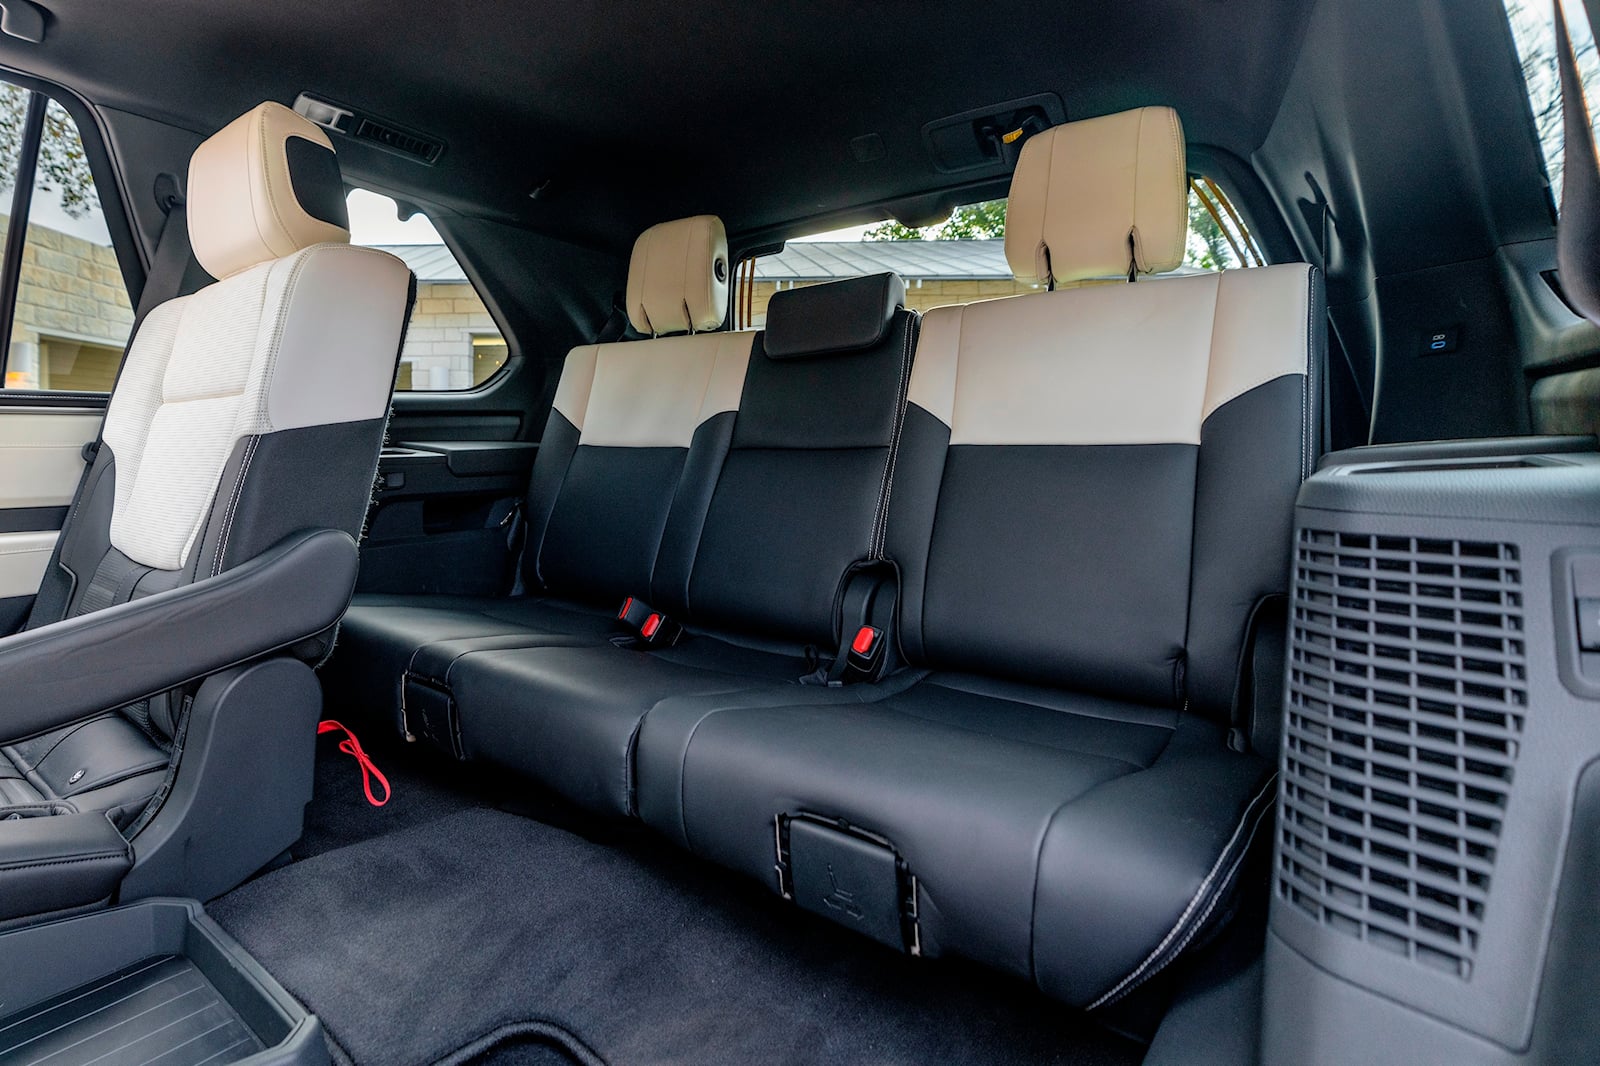 2023 Toyota Sequoia Review Trims Specs Price New Interior Features